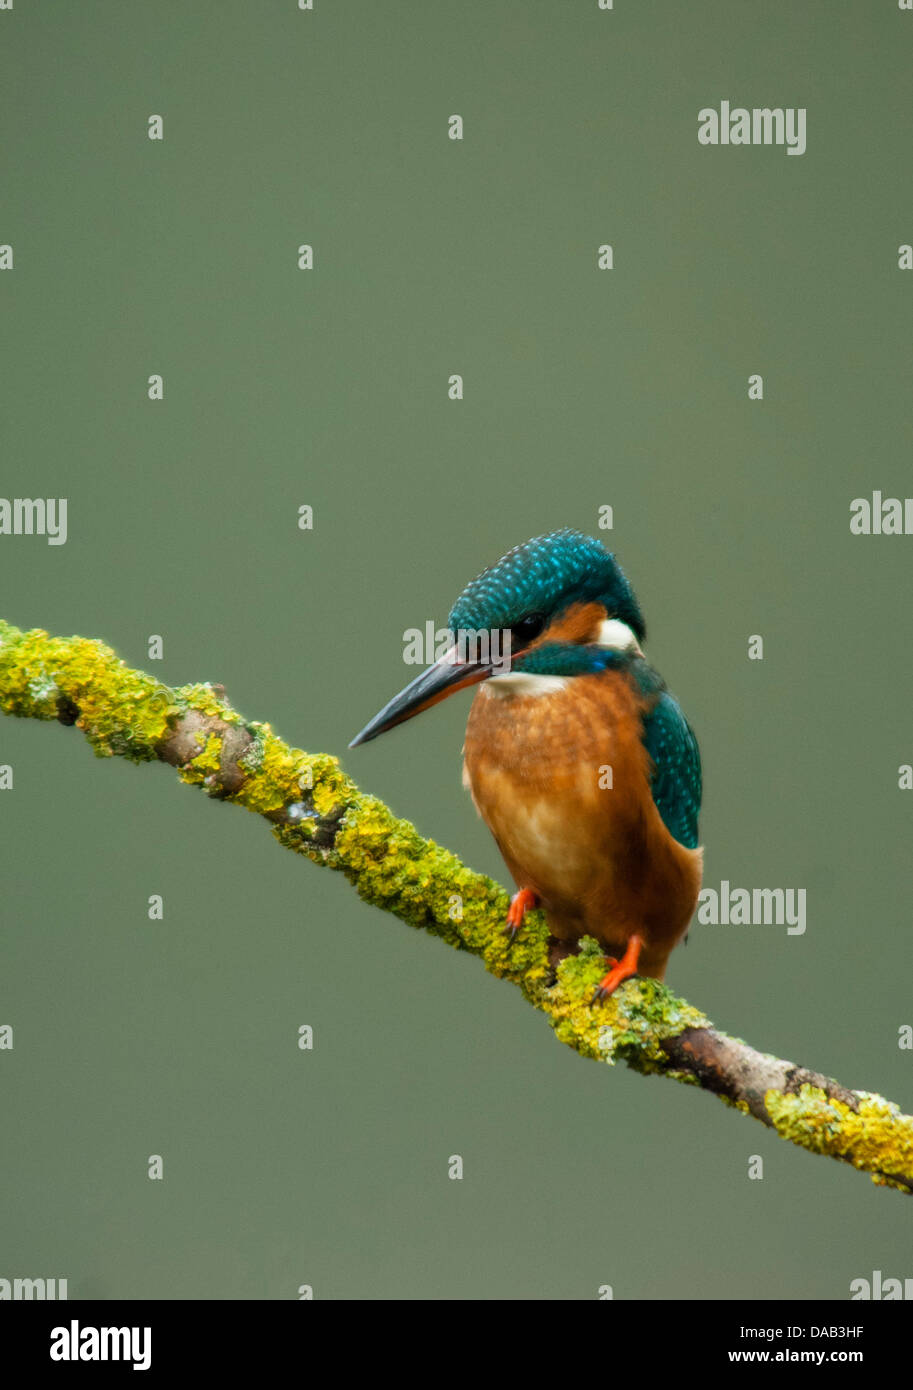 Kingfisher on tree branch Stock Photo